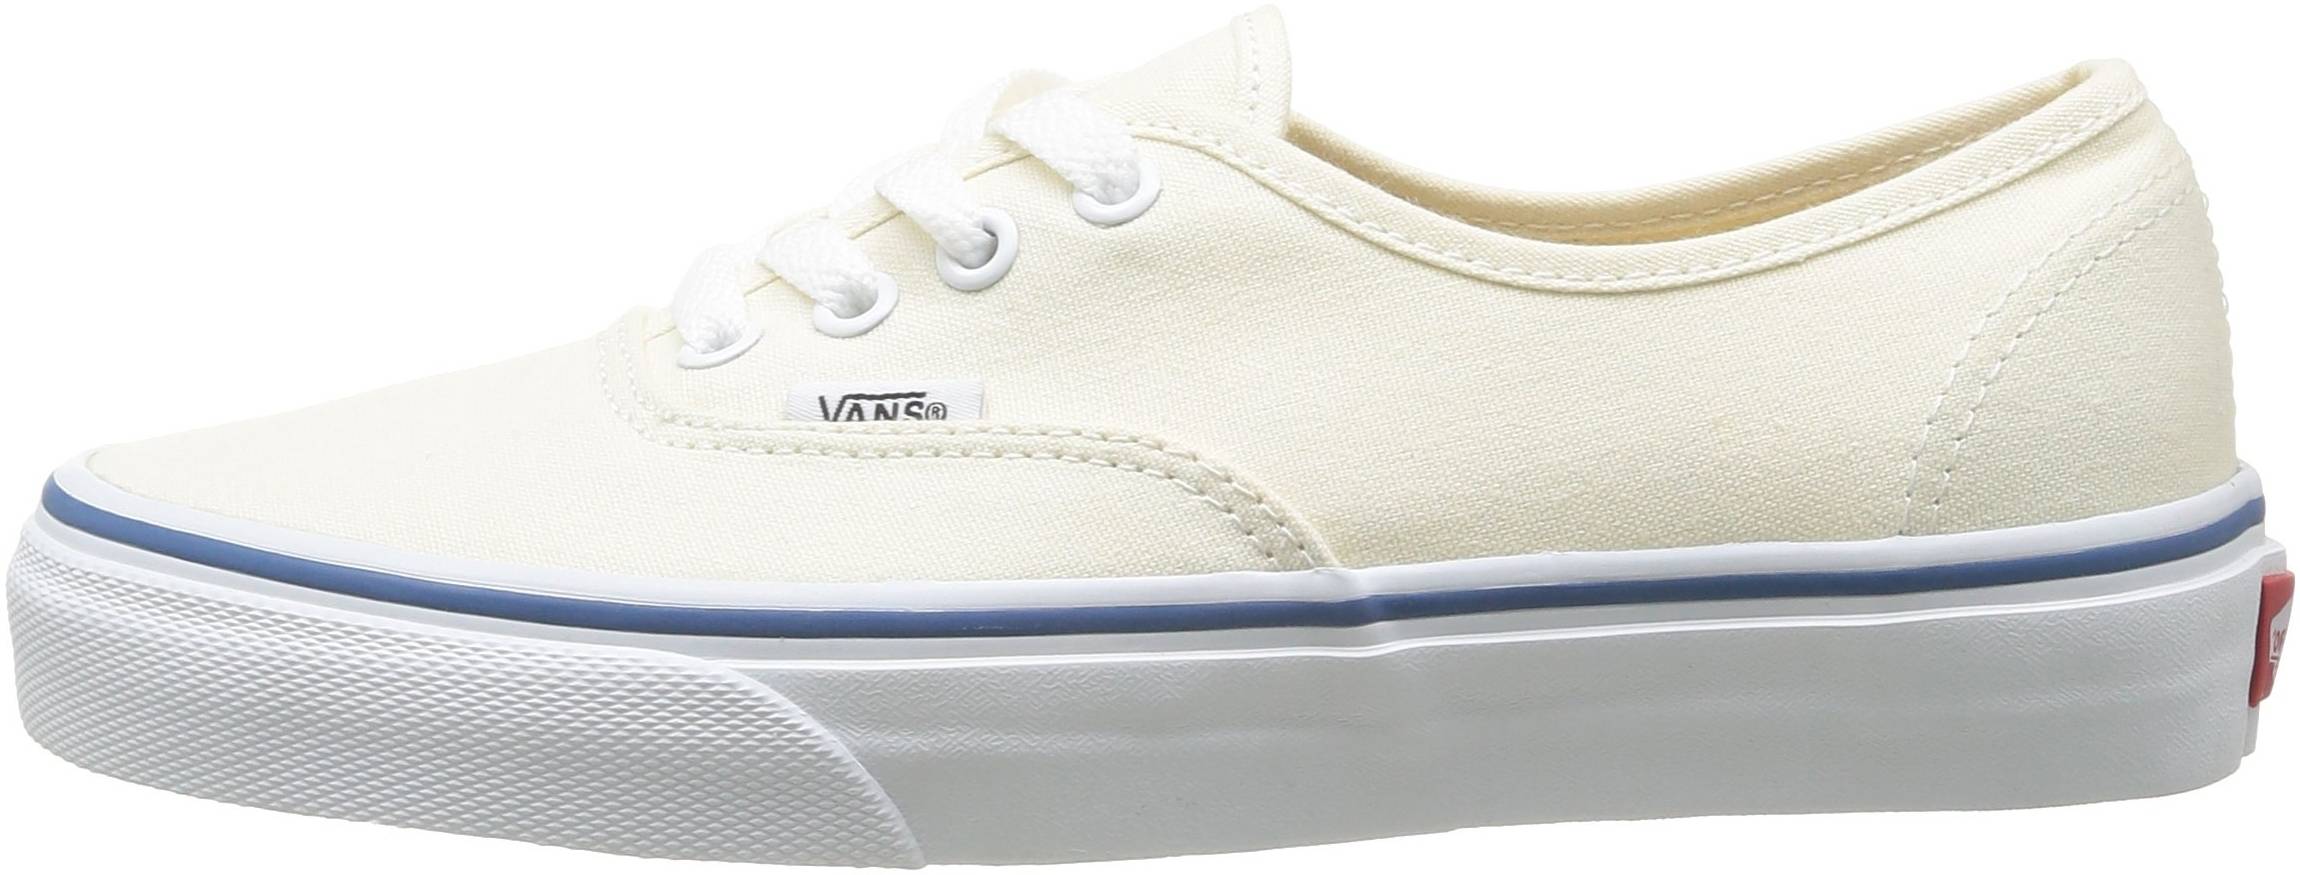 van white shoes